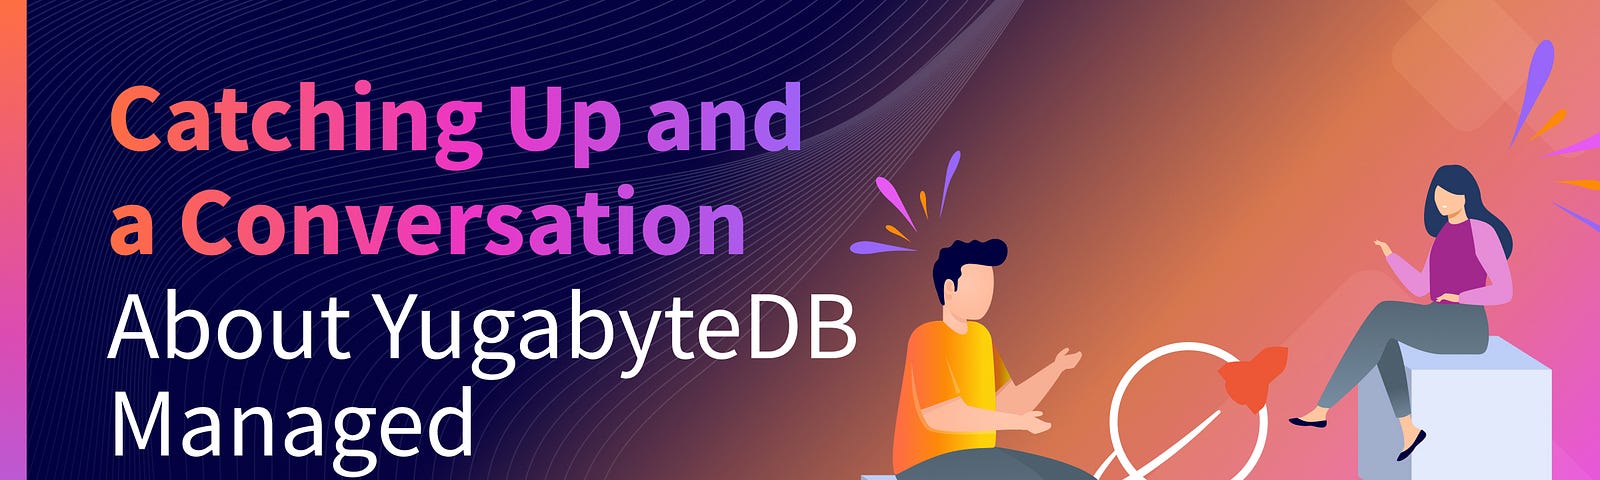 Catching Up and a Conversation About YugabyteDB Managed Blog Image